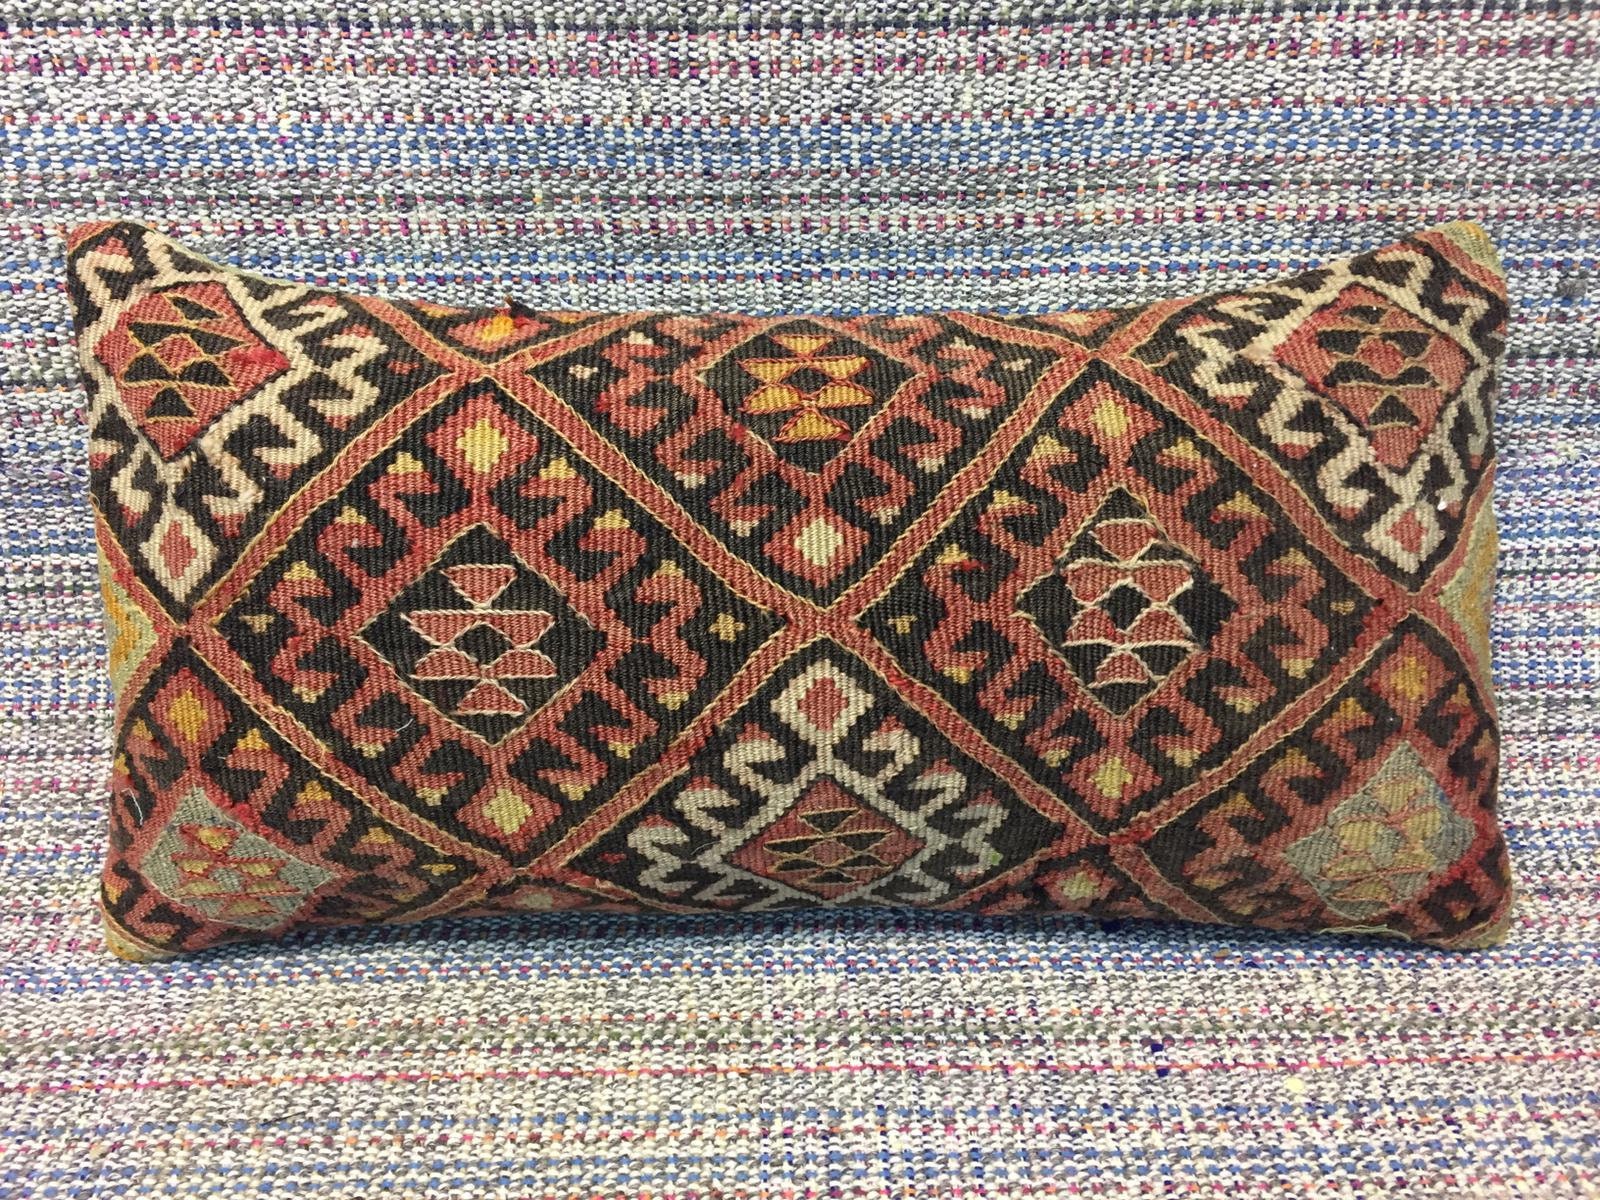 anatolian kilim pillow turkish kilim pillow handwoven kilim pillow sofa pillow 12x24 lumbar kilim pillow naturel kilim pillow code 1474